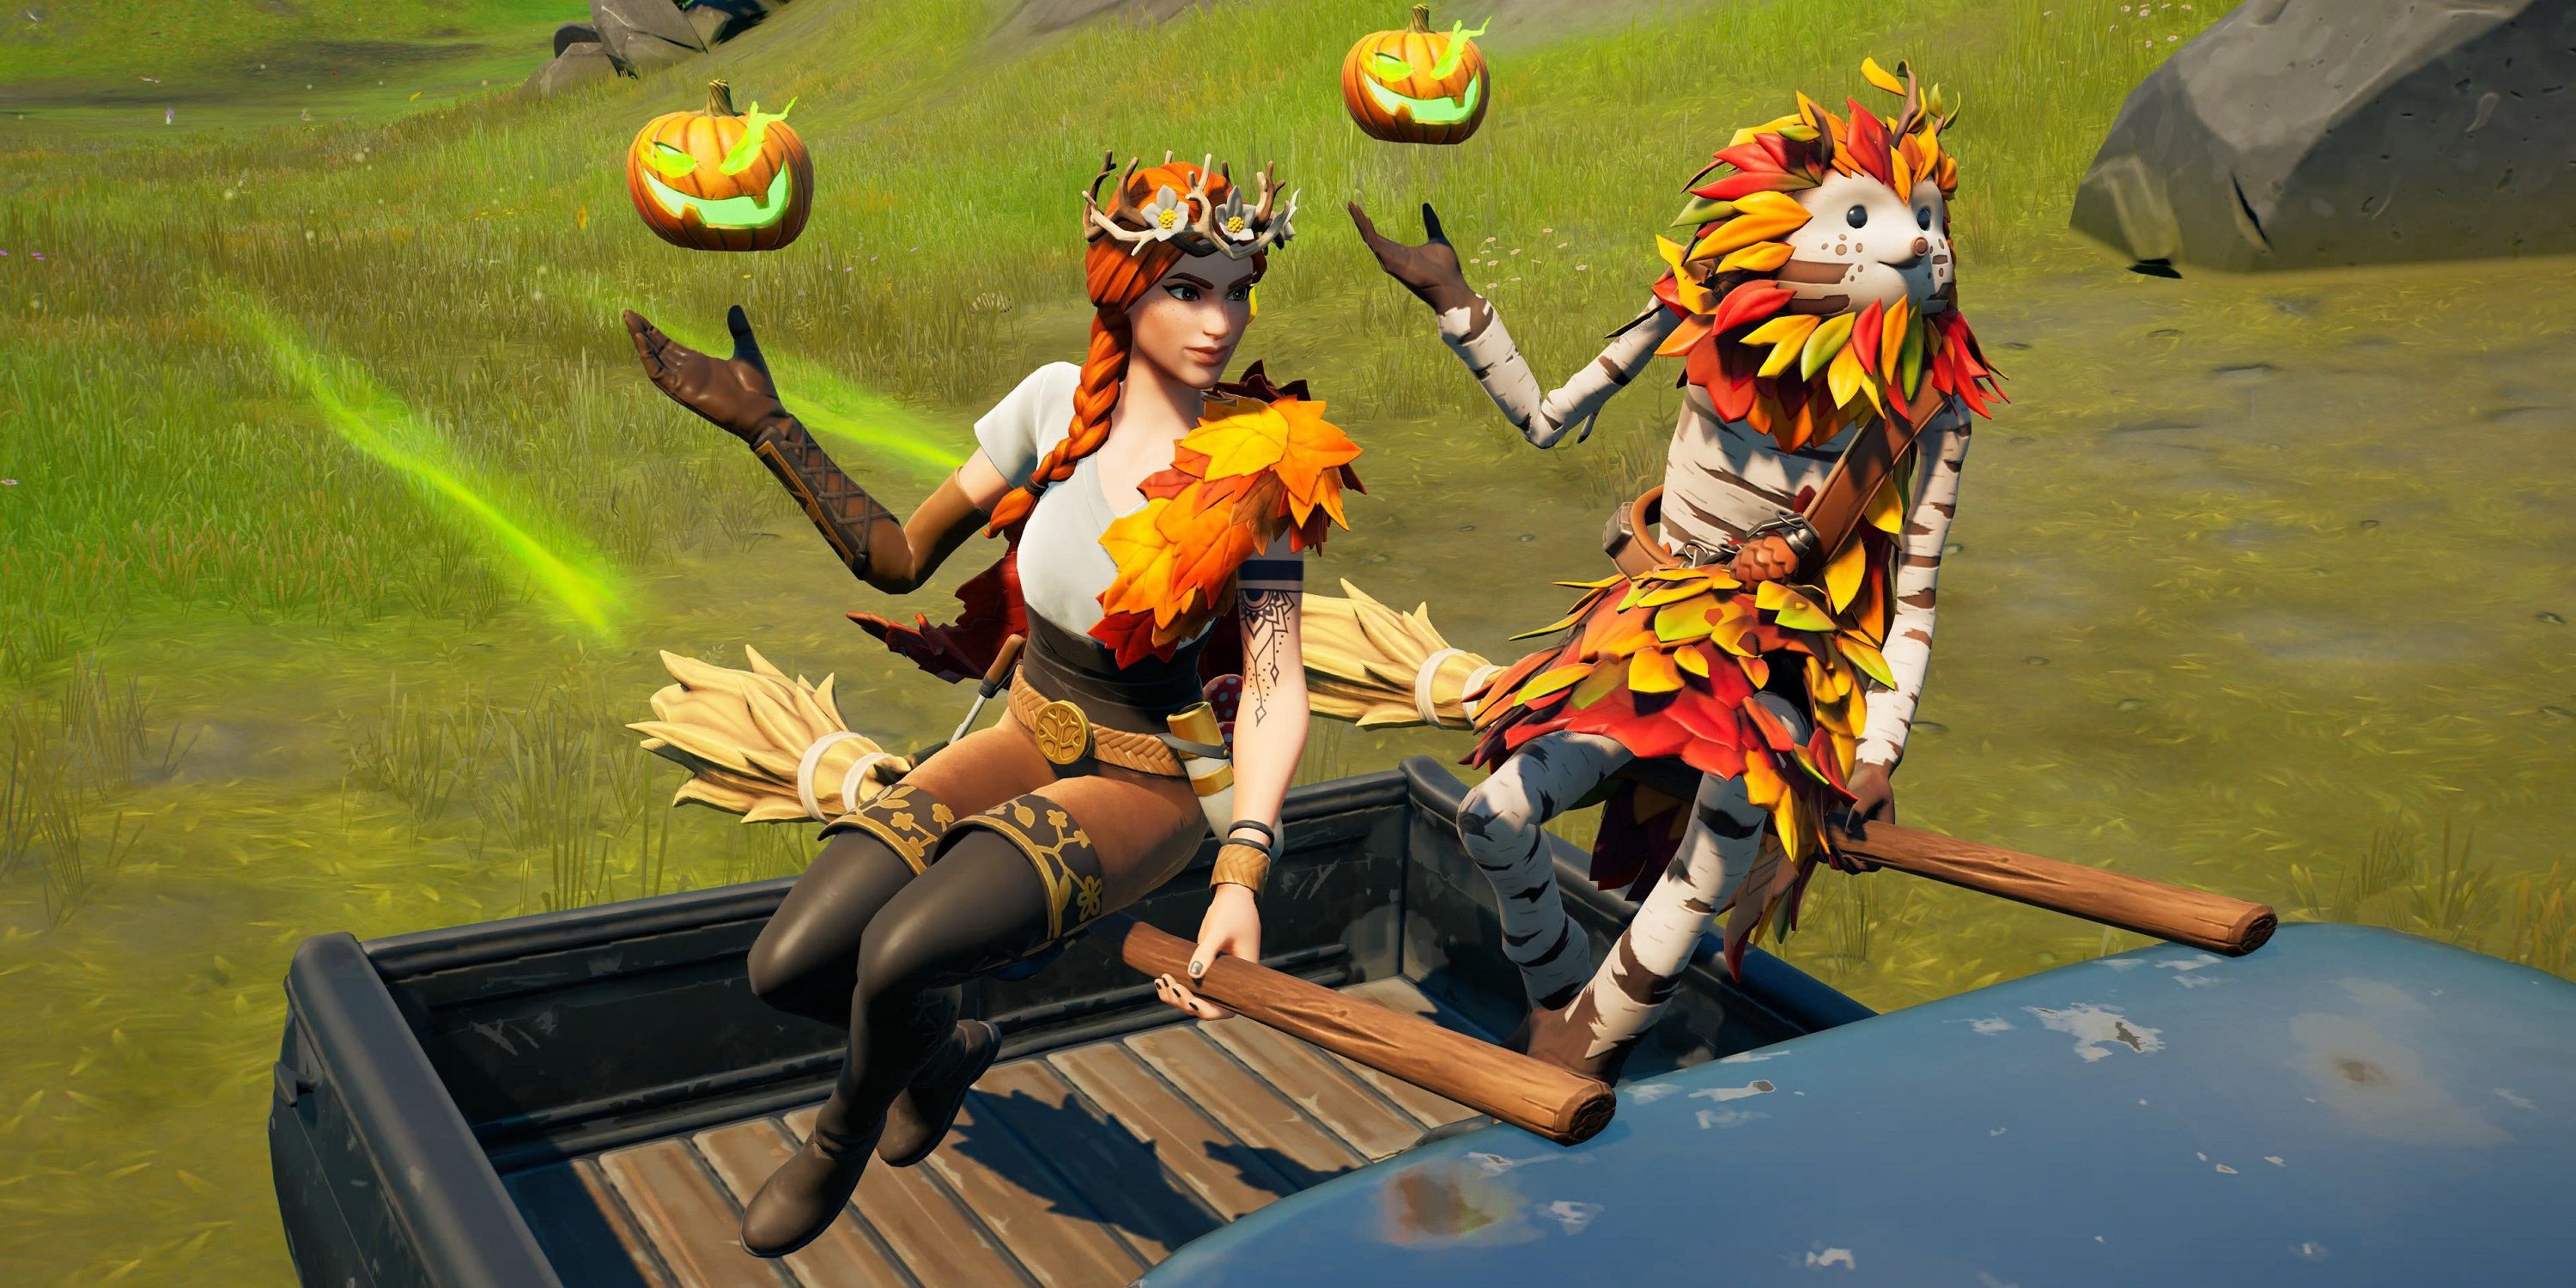 Fortnite Zero Build Autumn Character Emoting With Pumpkins